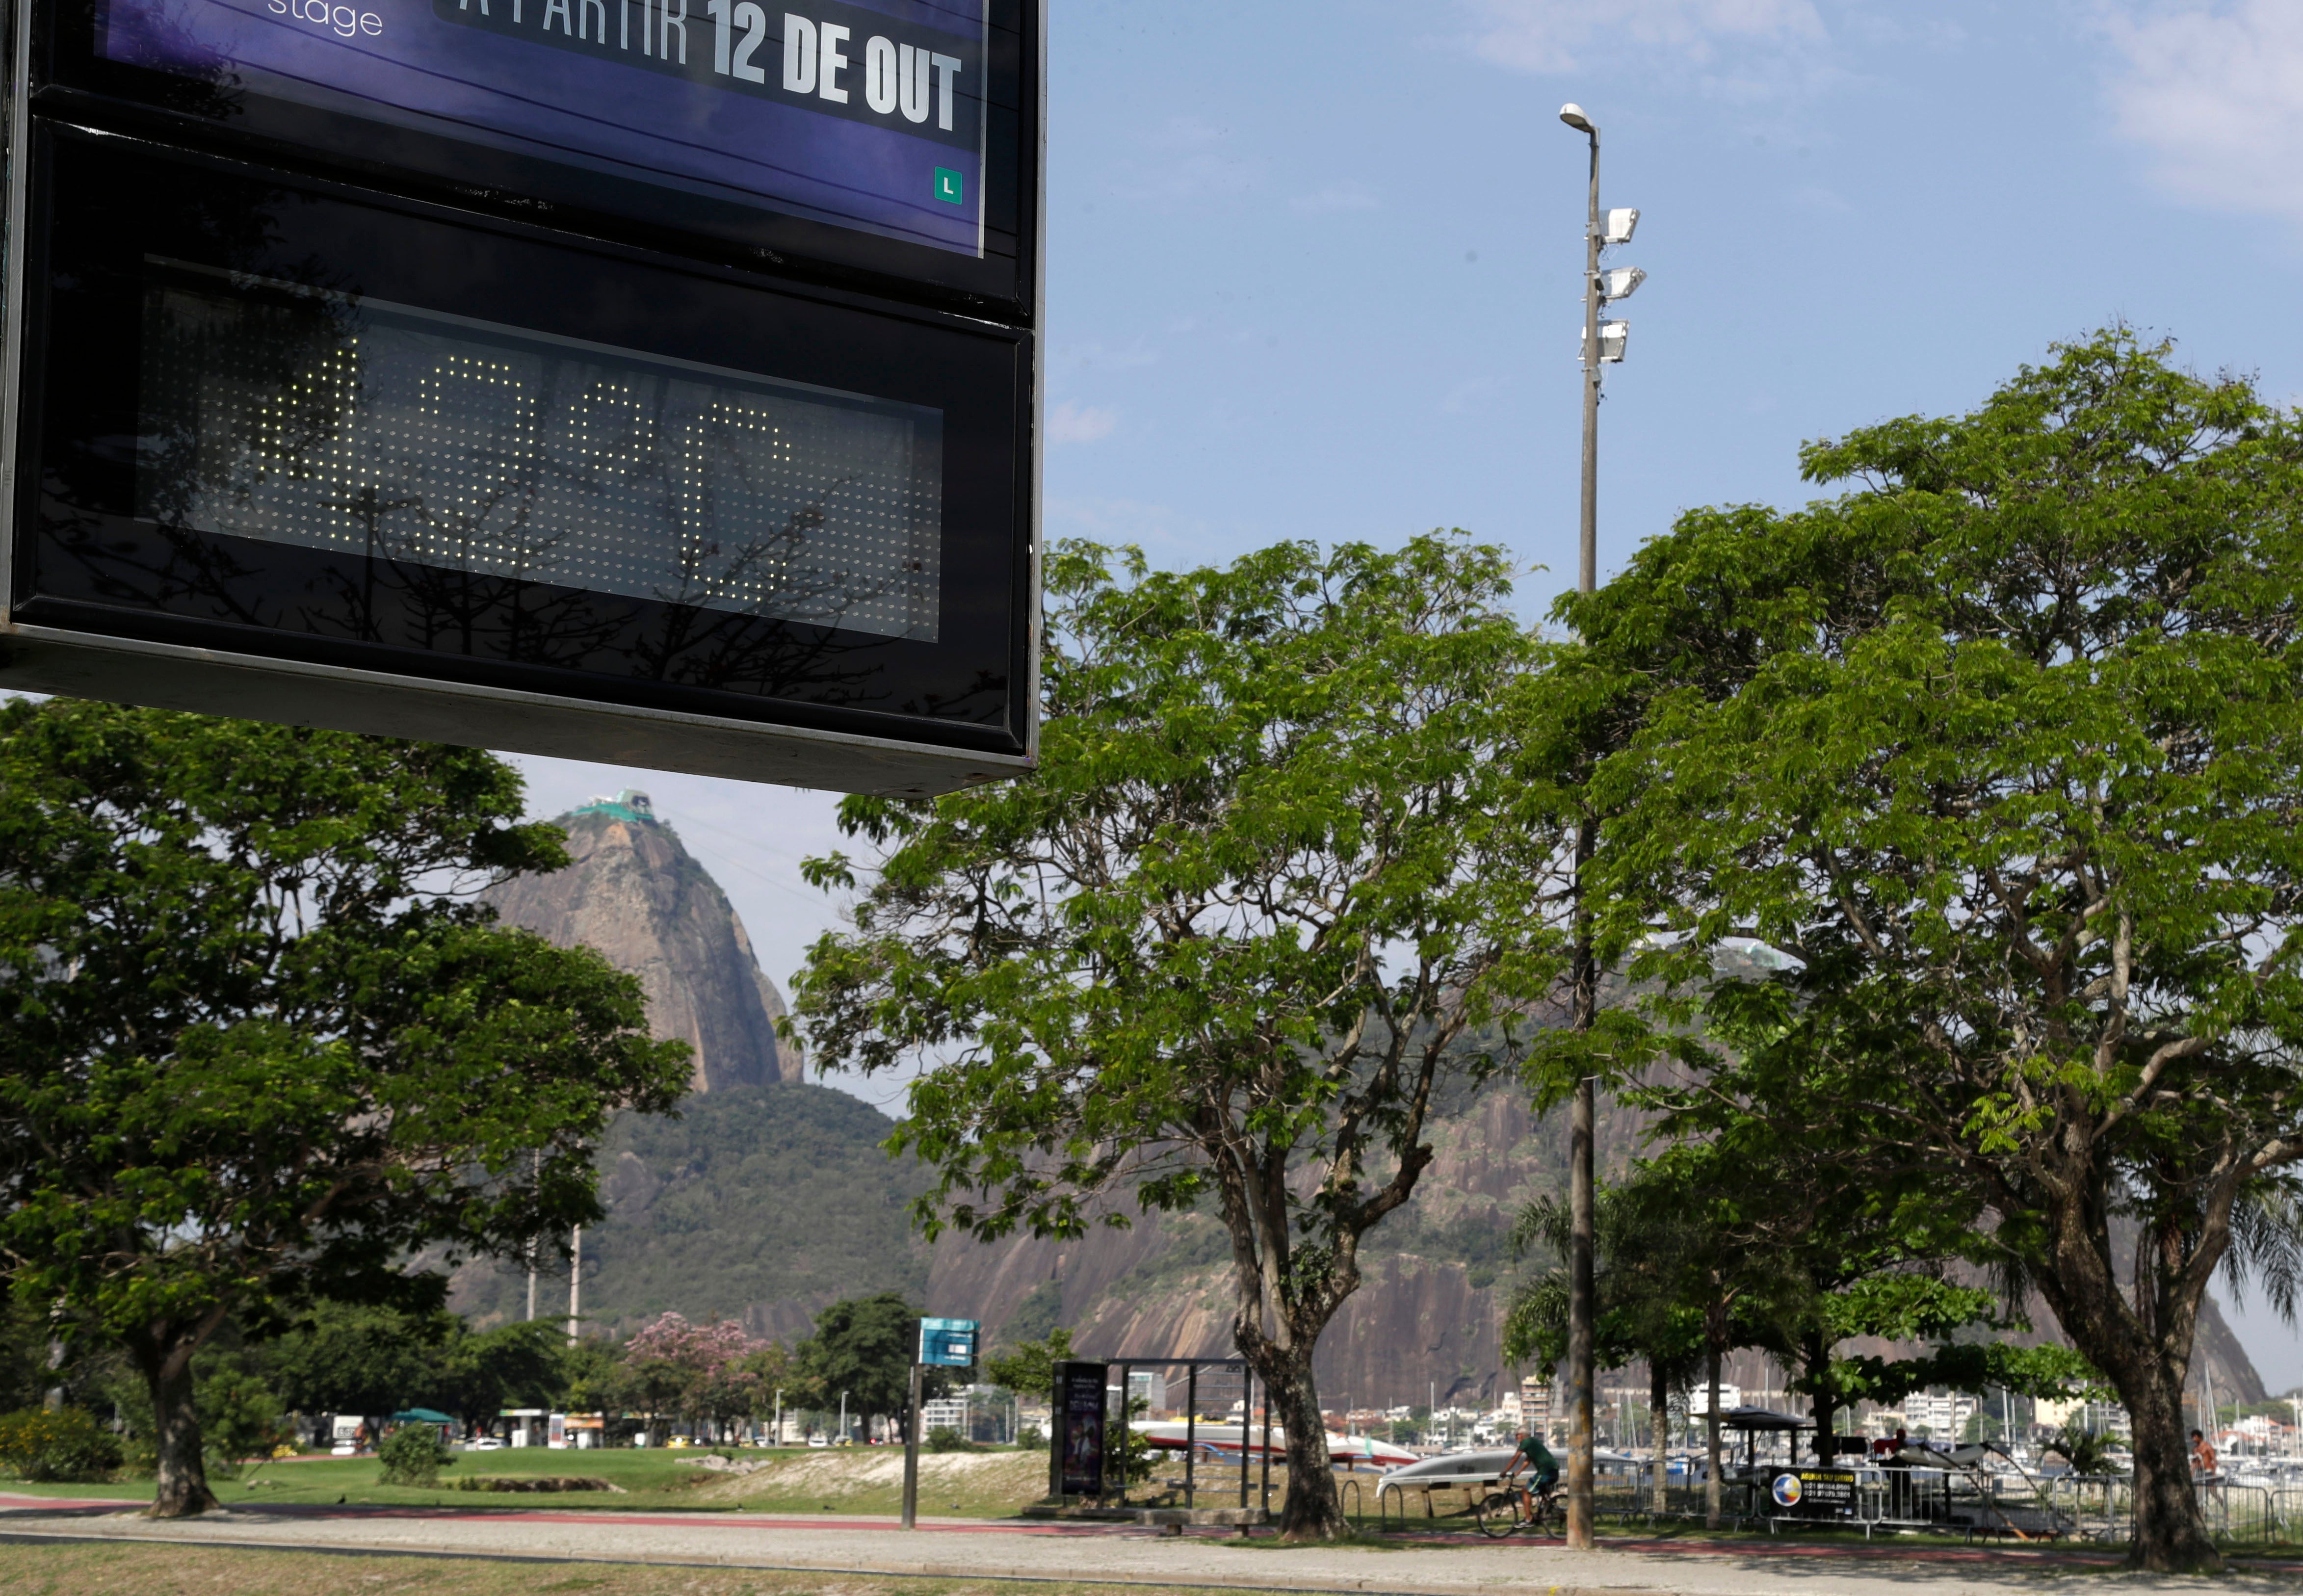 A digital sign displays the temperature at 42C in Rio de Janeiro, Brazil